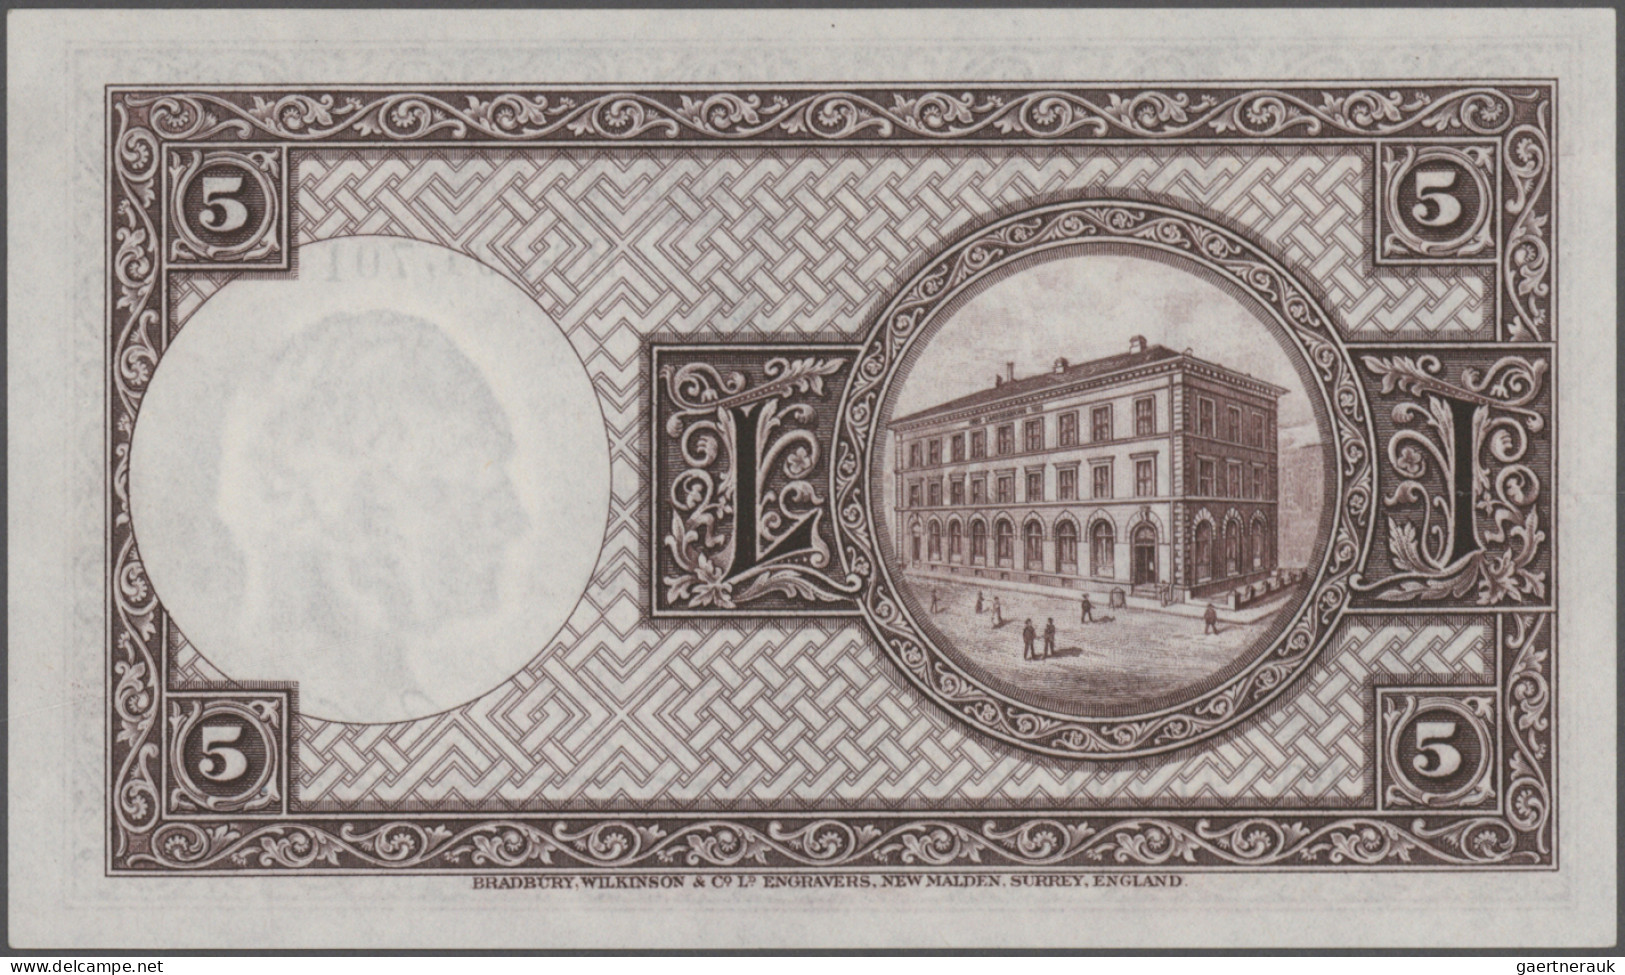 Iceland: Landsbanki Islands, nice set with 4 banknotes, L.1885/1900 and 1928, wi